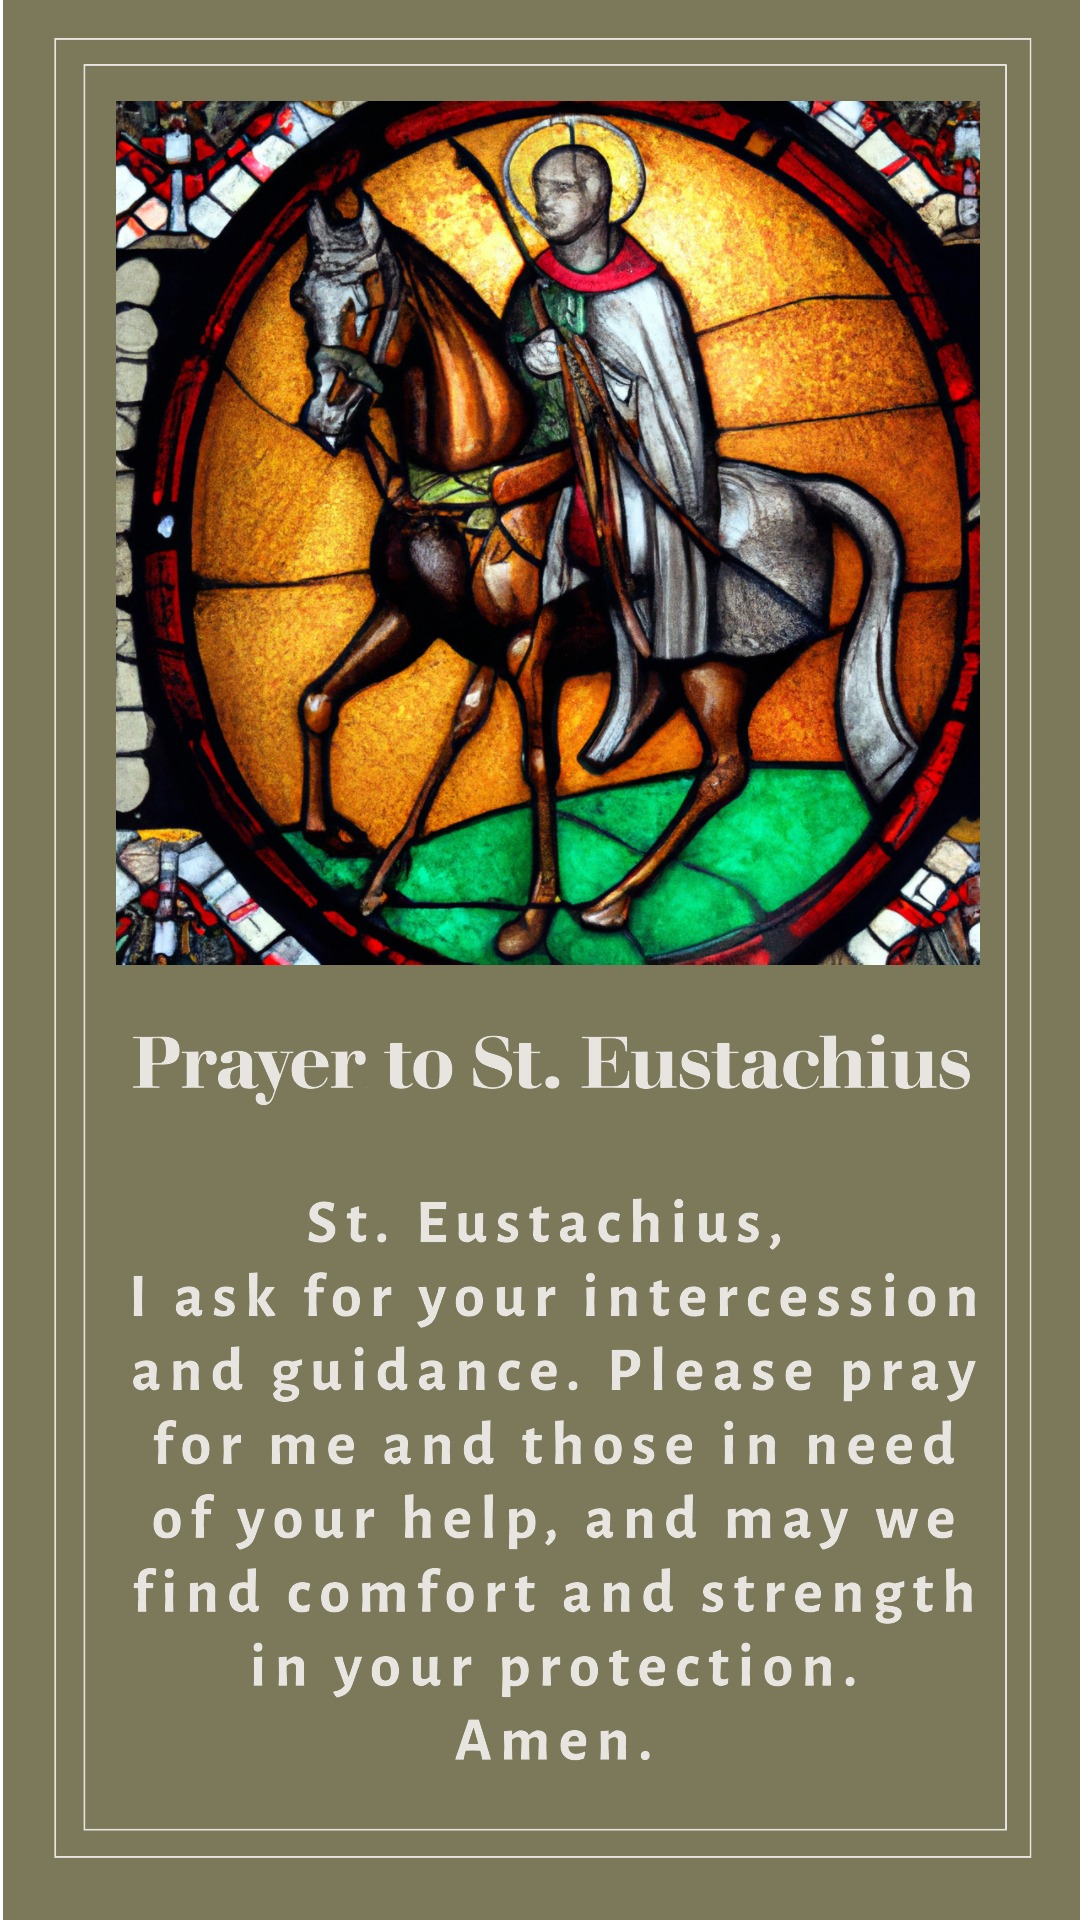 Prayer to St. Eustachius